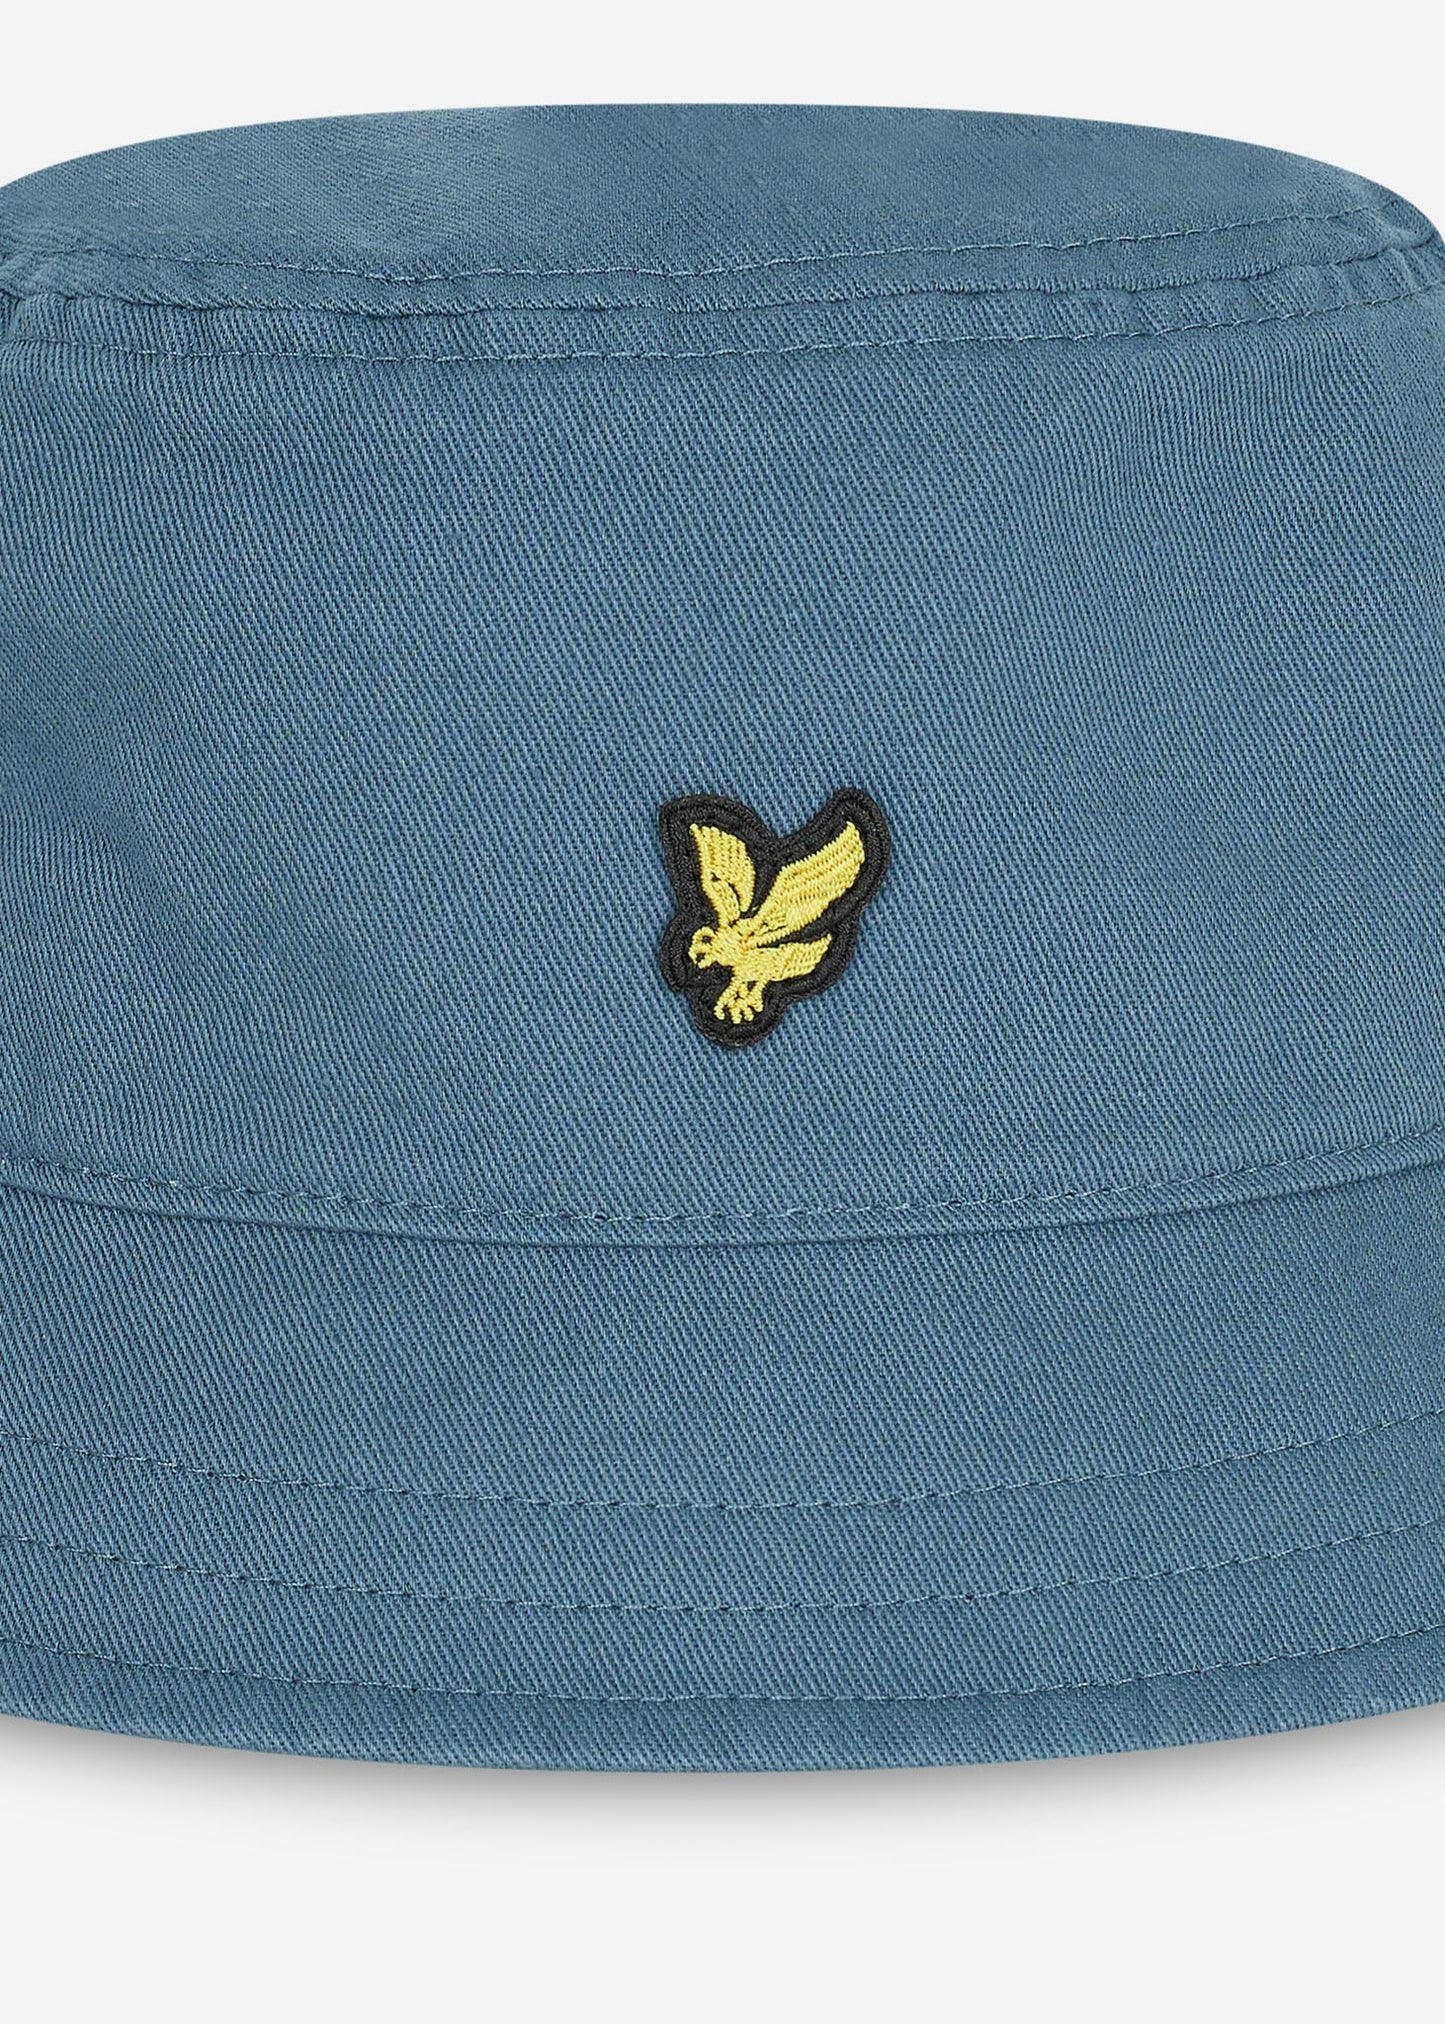 Bucket hat - skipton blue